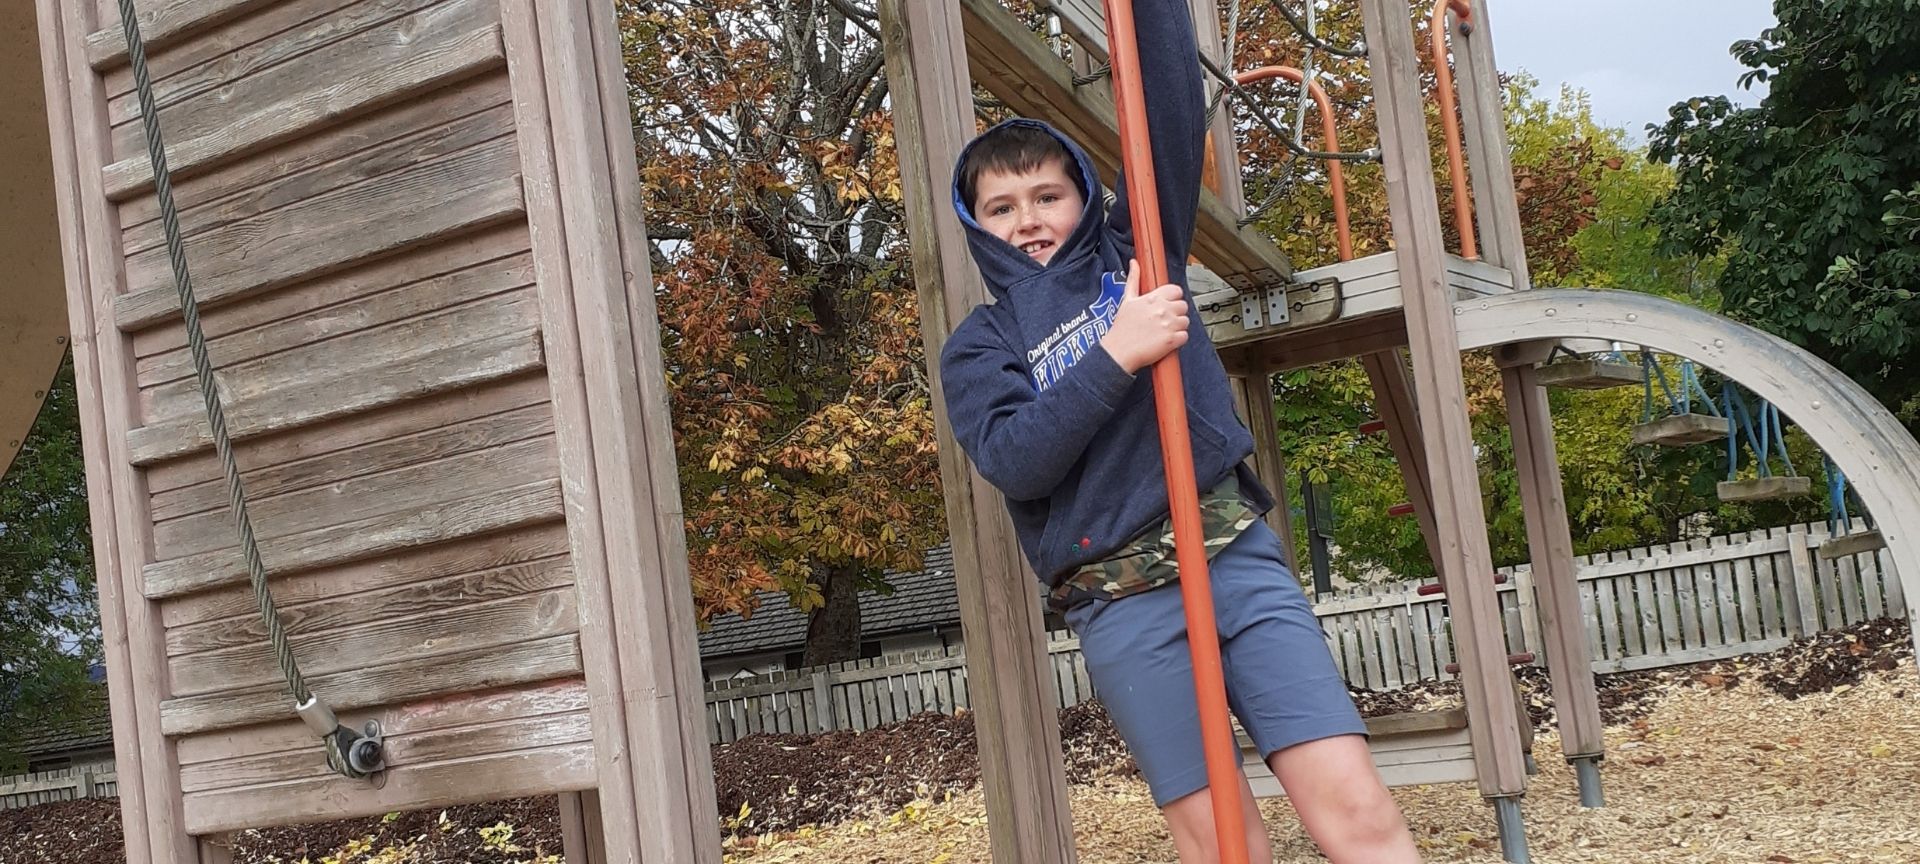 Boy climbing fireman's pole in playground